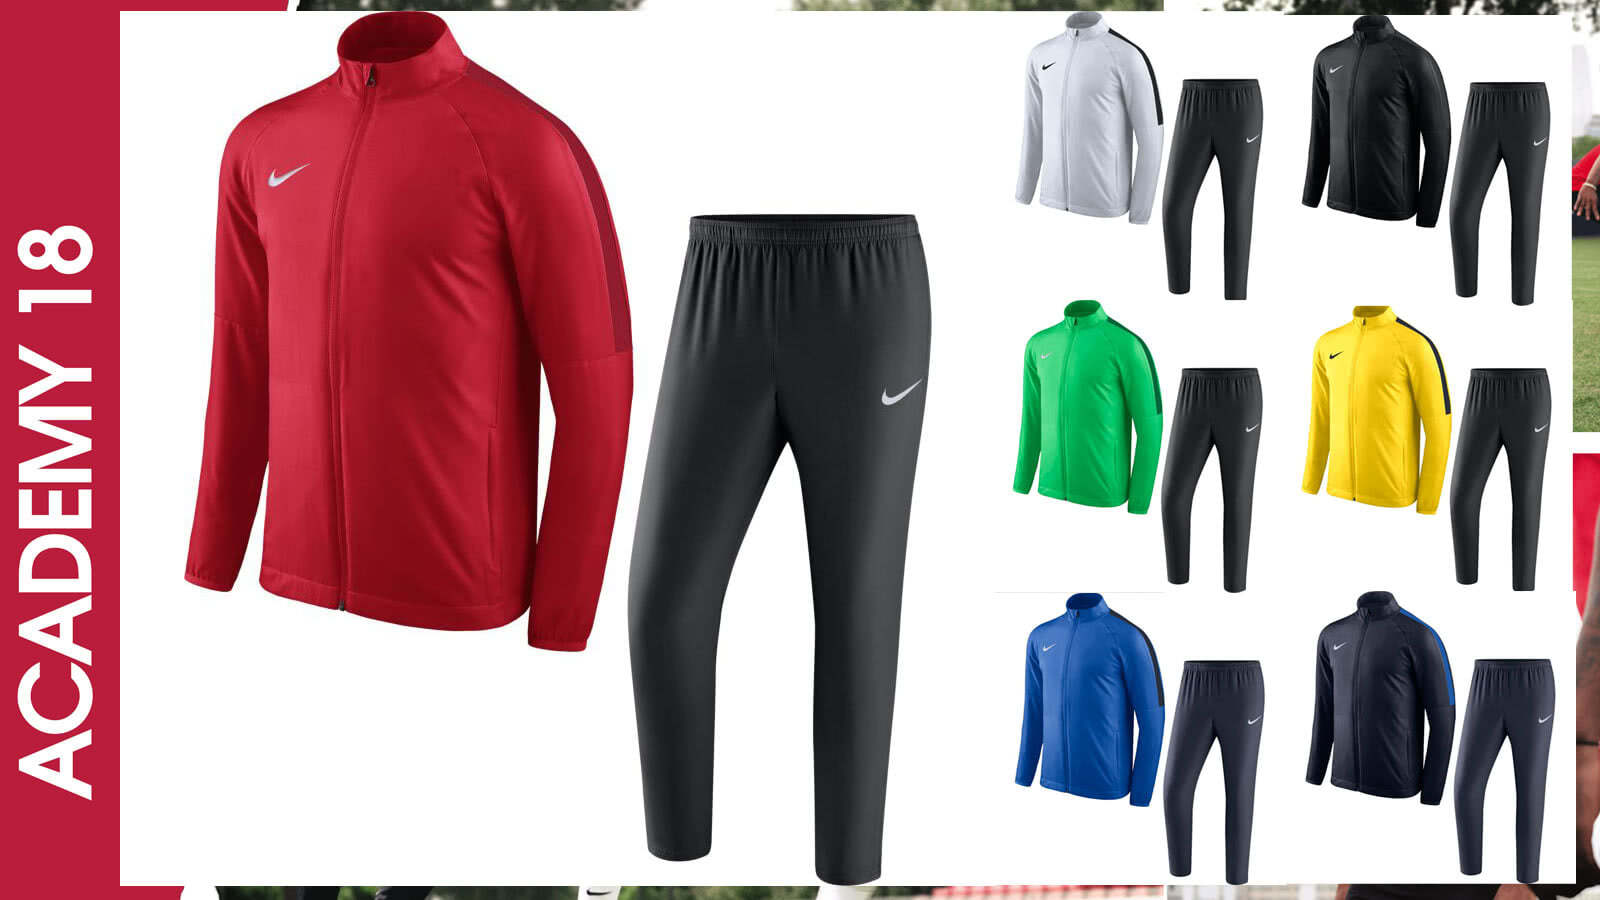 Die Nike Academy 18 Farbauswahl der Sportbekleidung